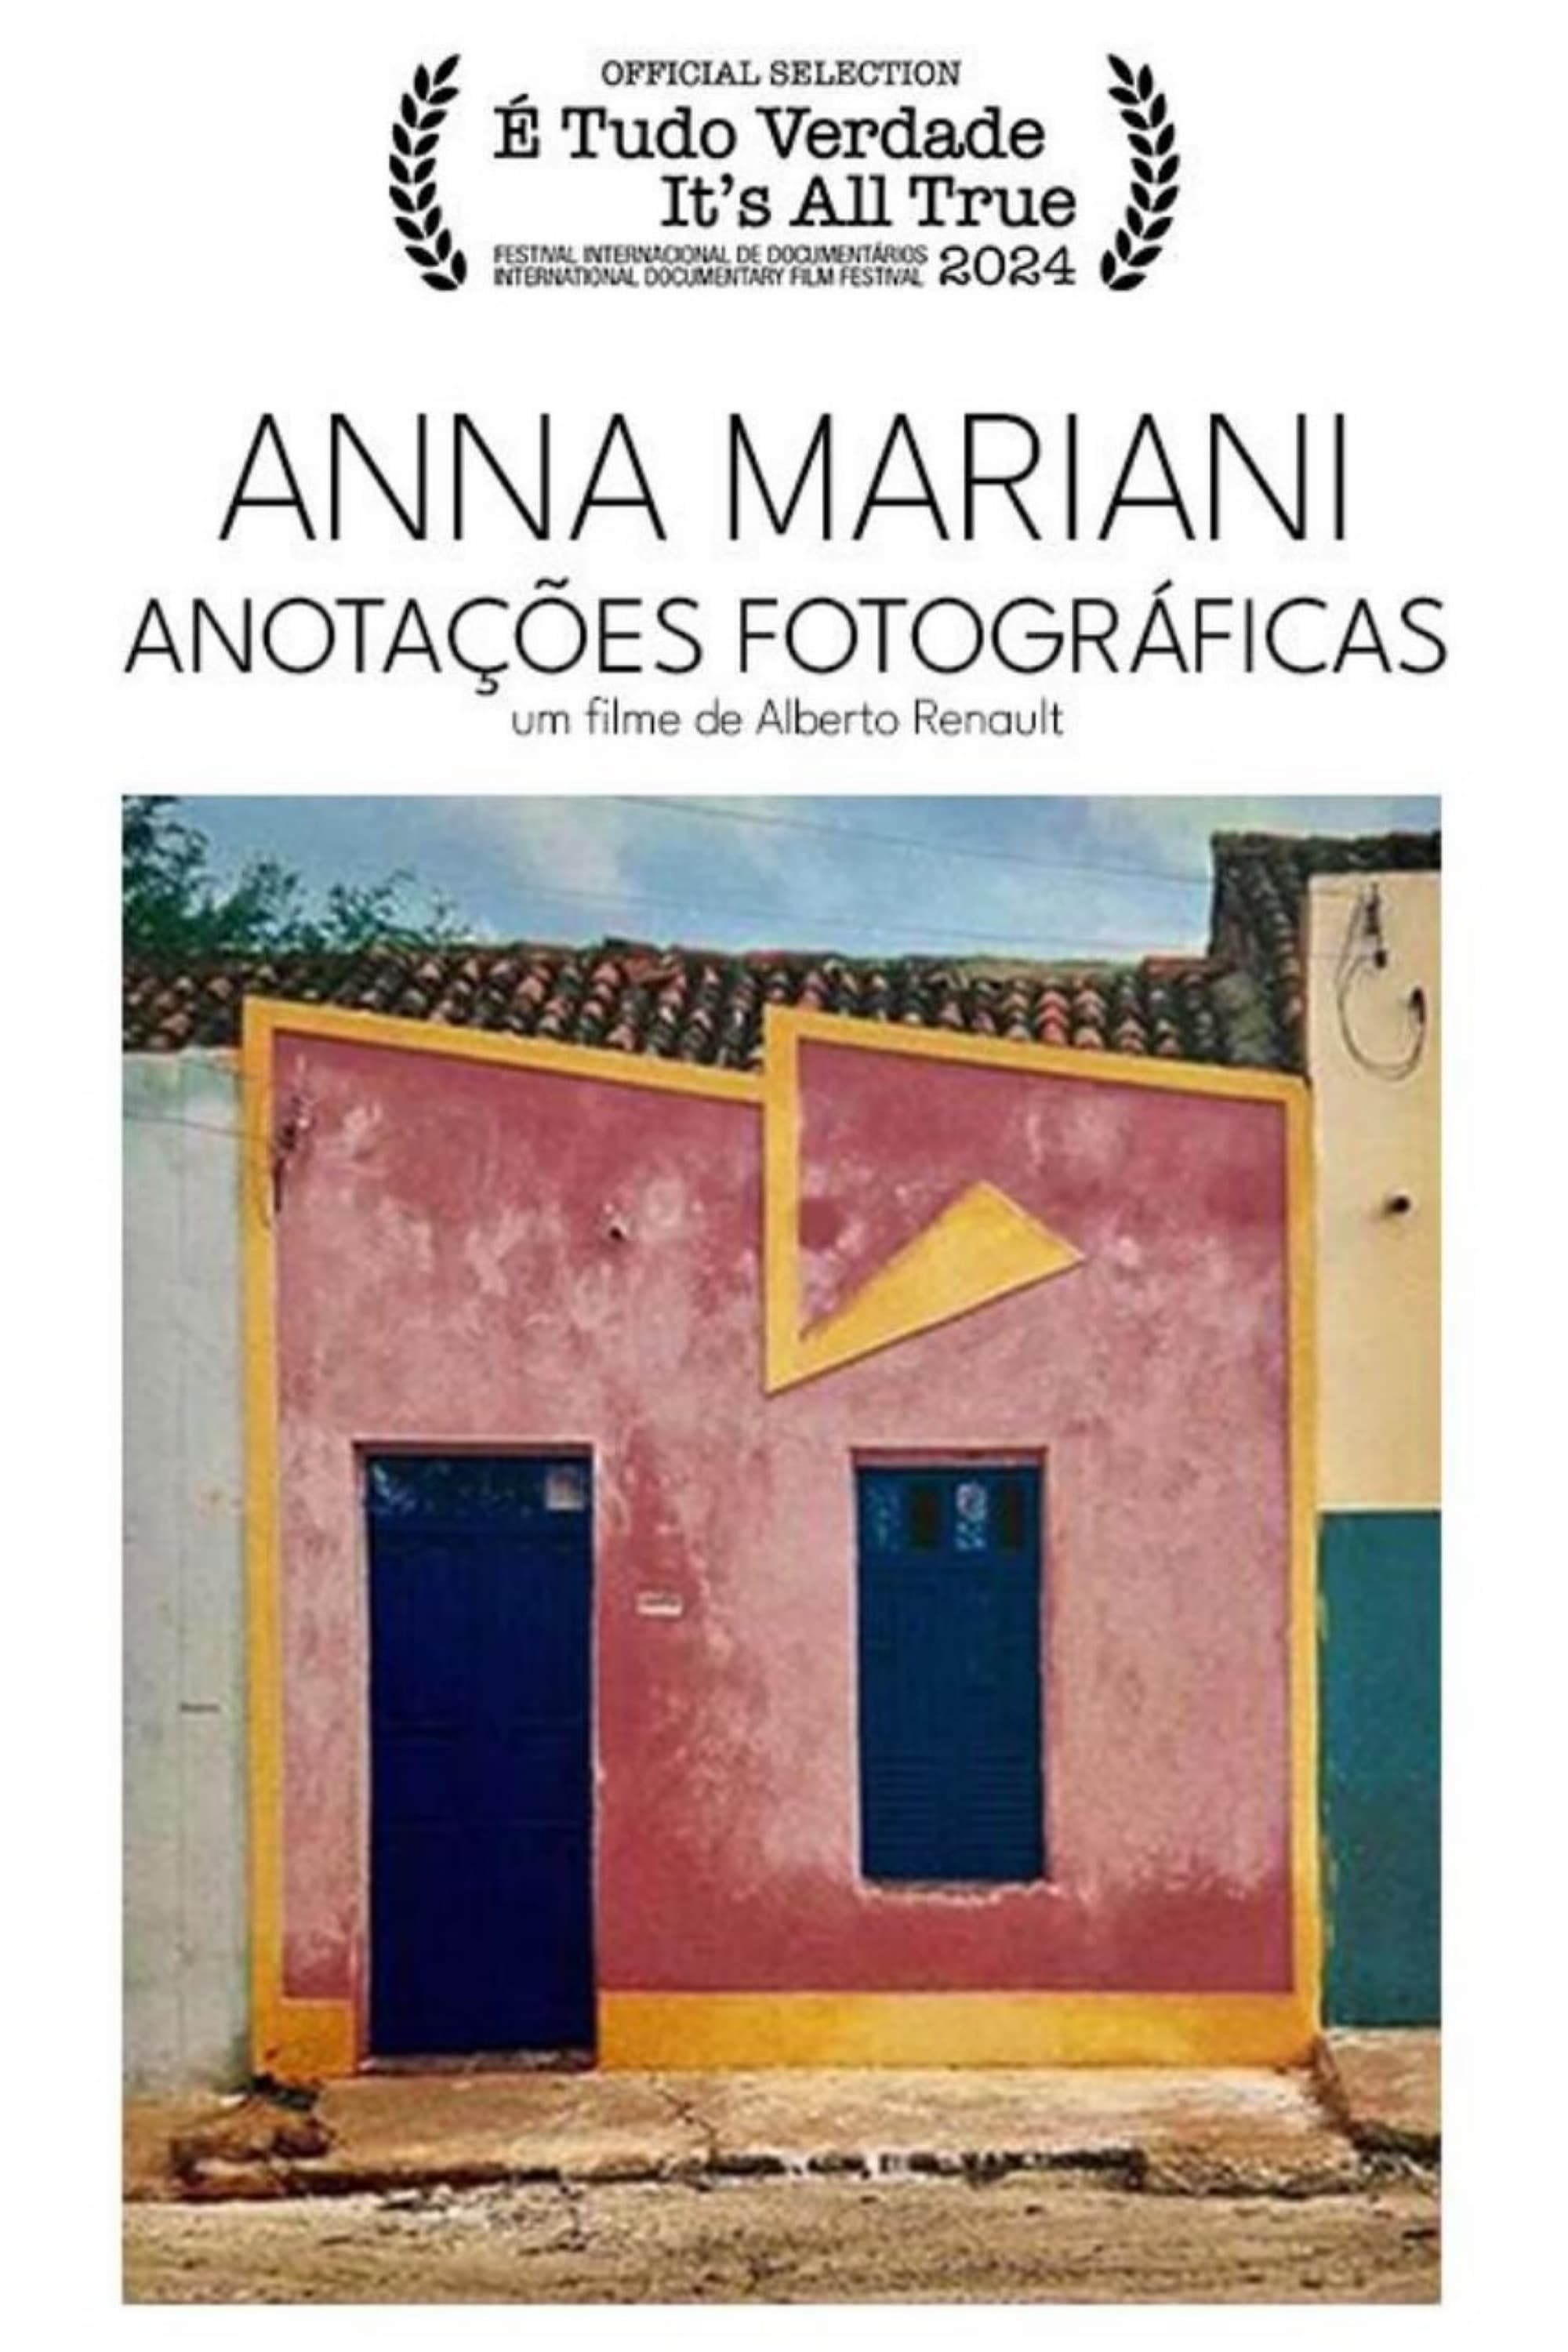 Anna Mariani - Photographic Notes